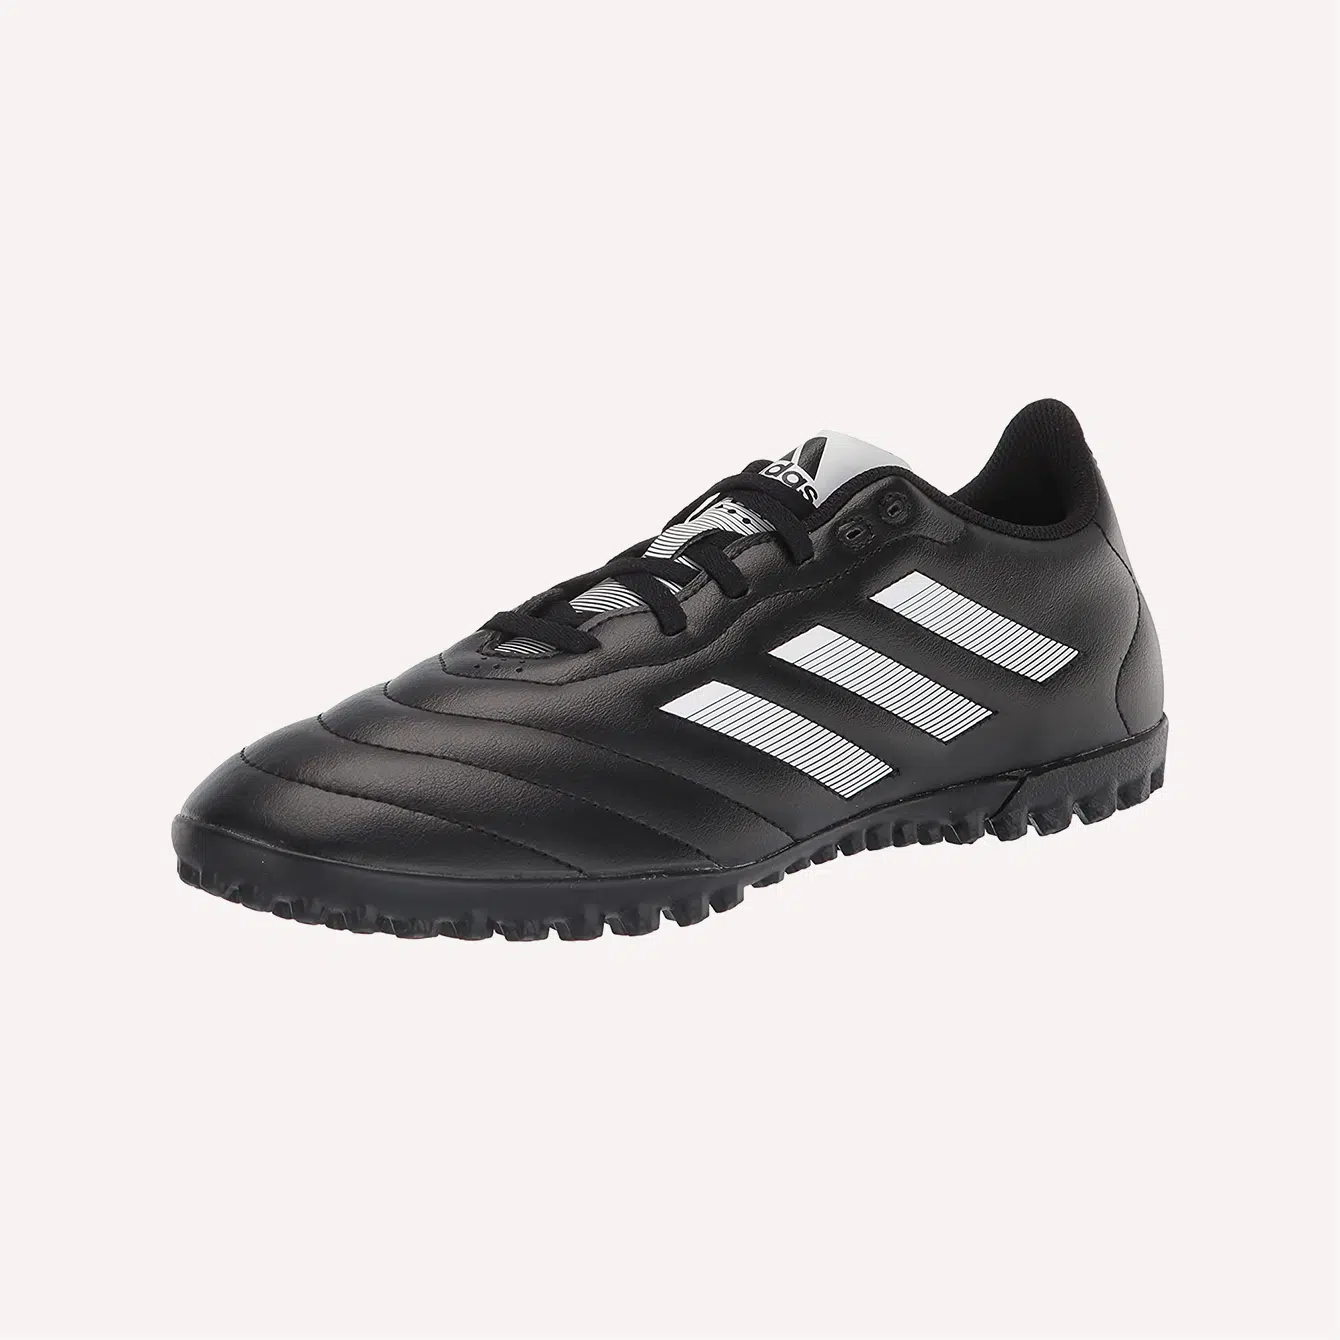 Adidas Unisex Adult Goletto VIII Turf Soccer Shoe